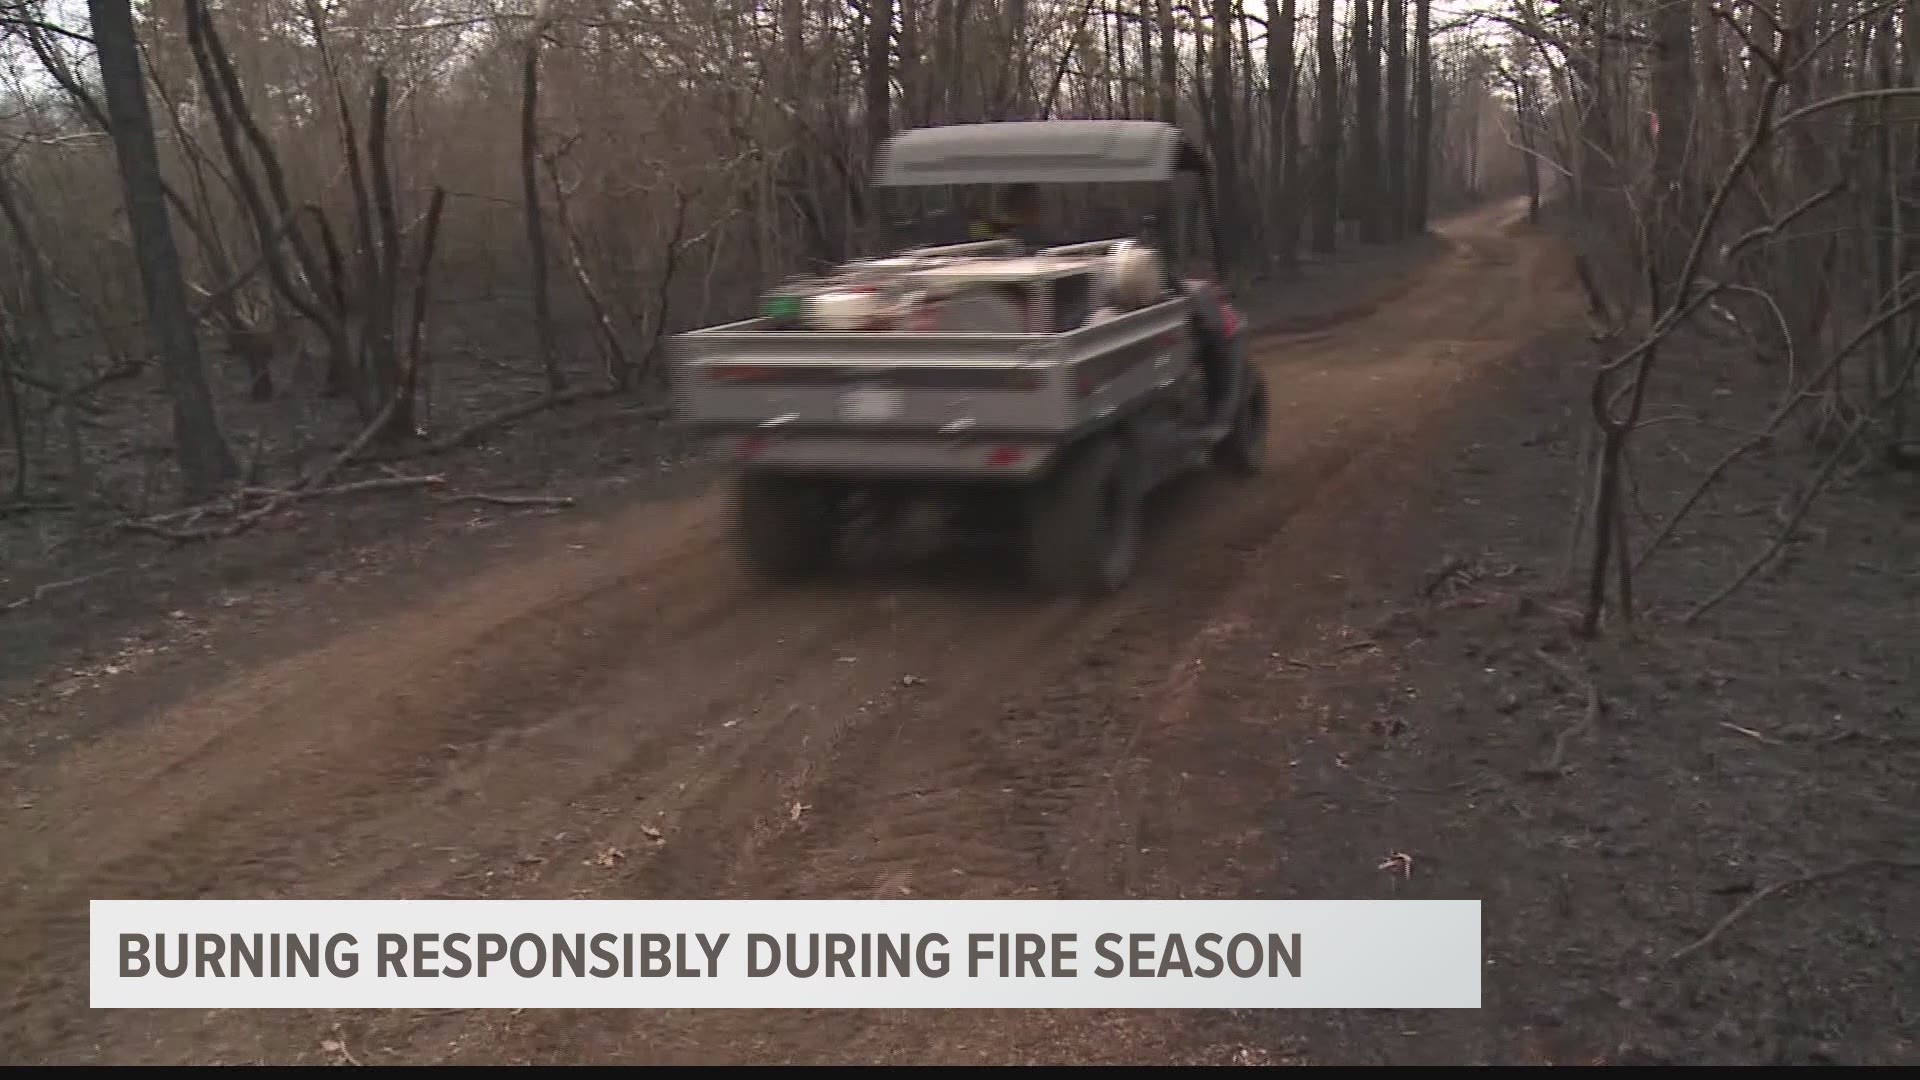 Burning responsibly during fire season